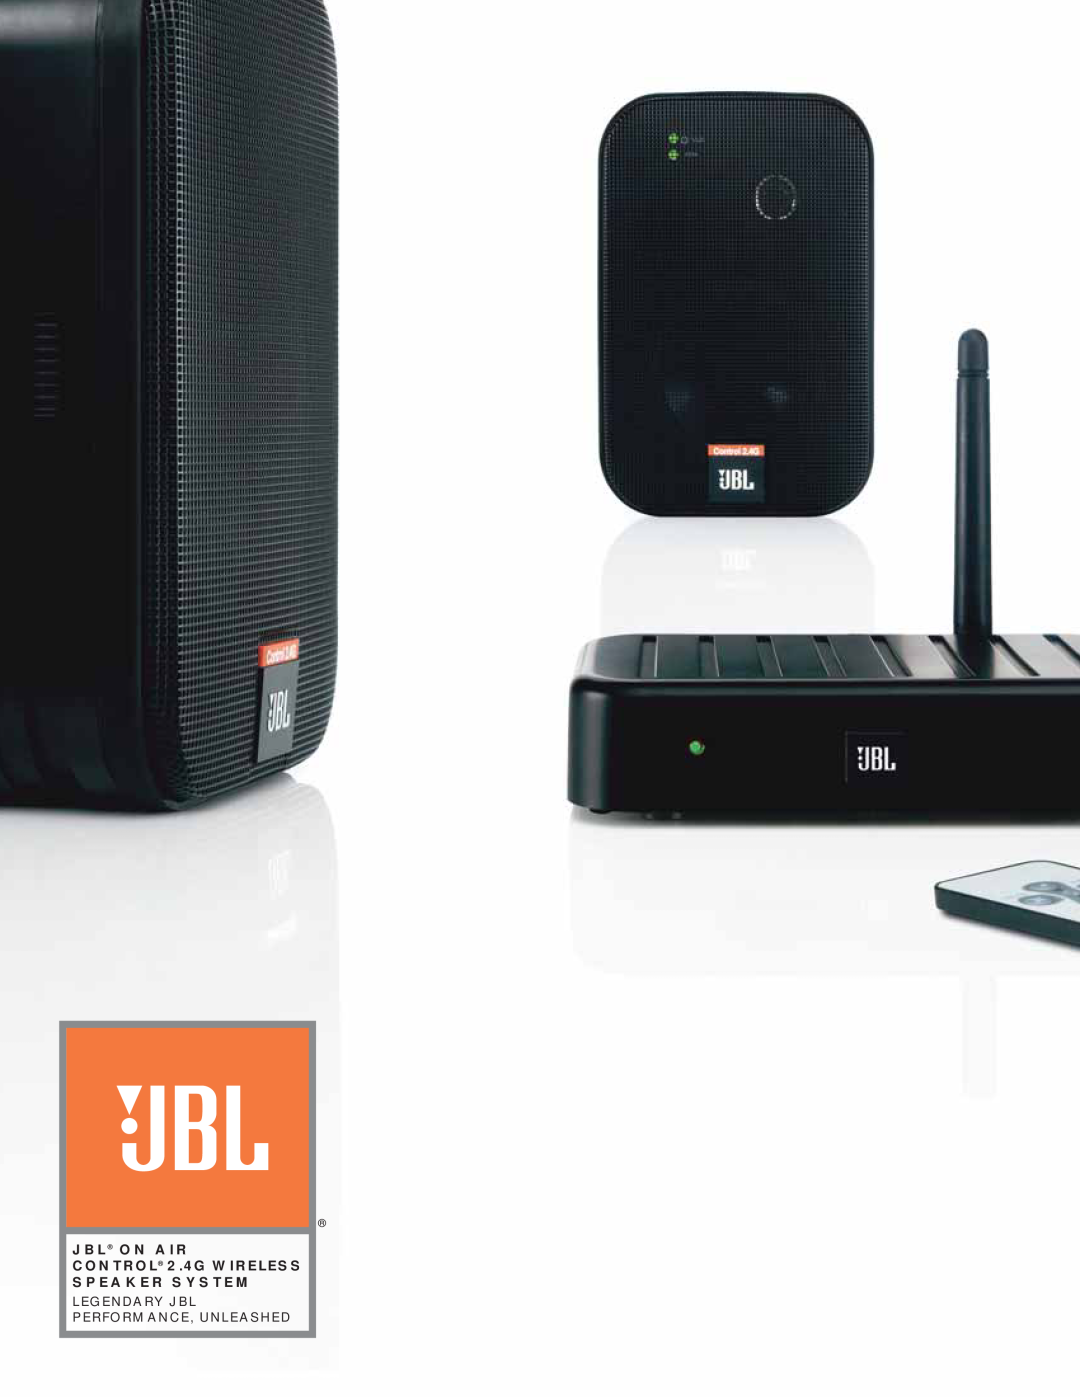 Bolens manual JBL ON AIR CONTROL 2.4G WIRELESS SPEAKER SYSTEM, Legendary Jbl Performance, Unleashed 